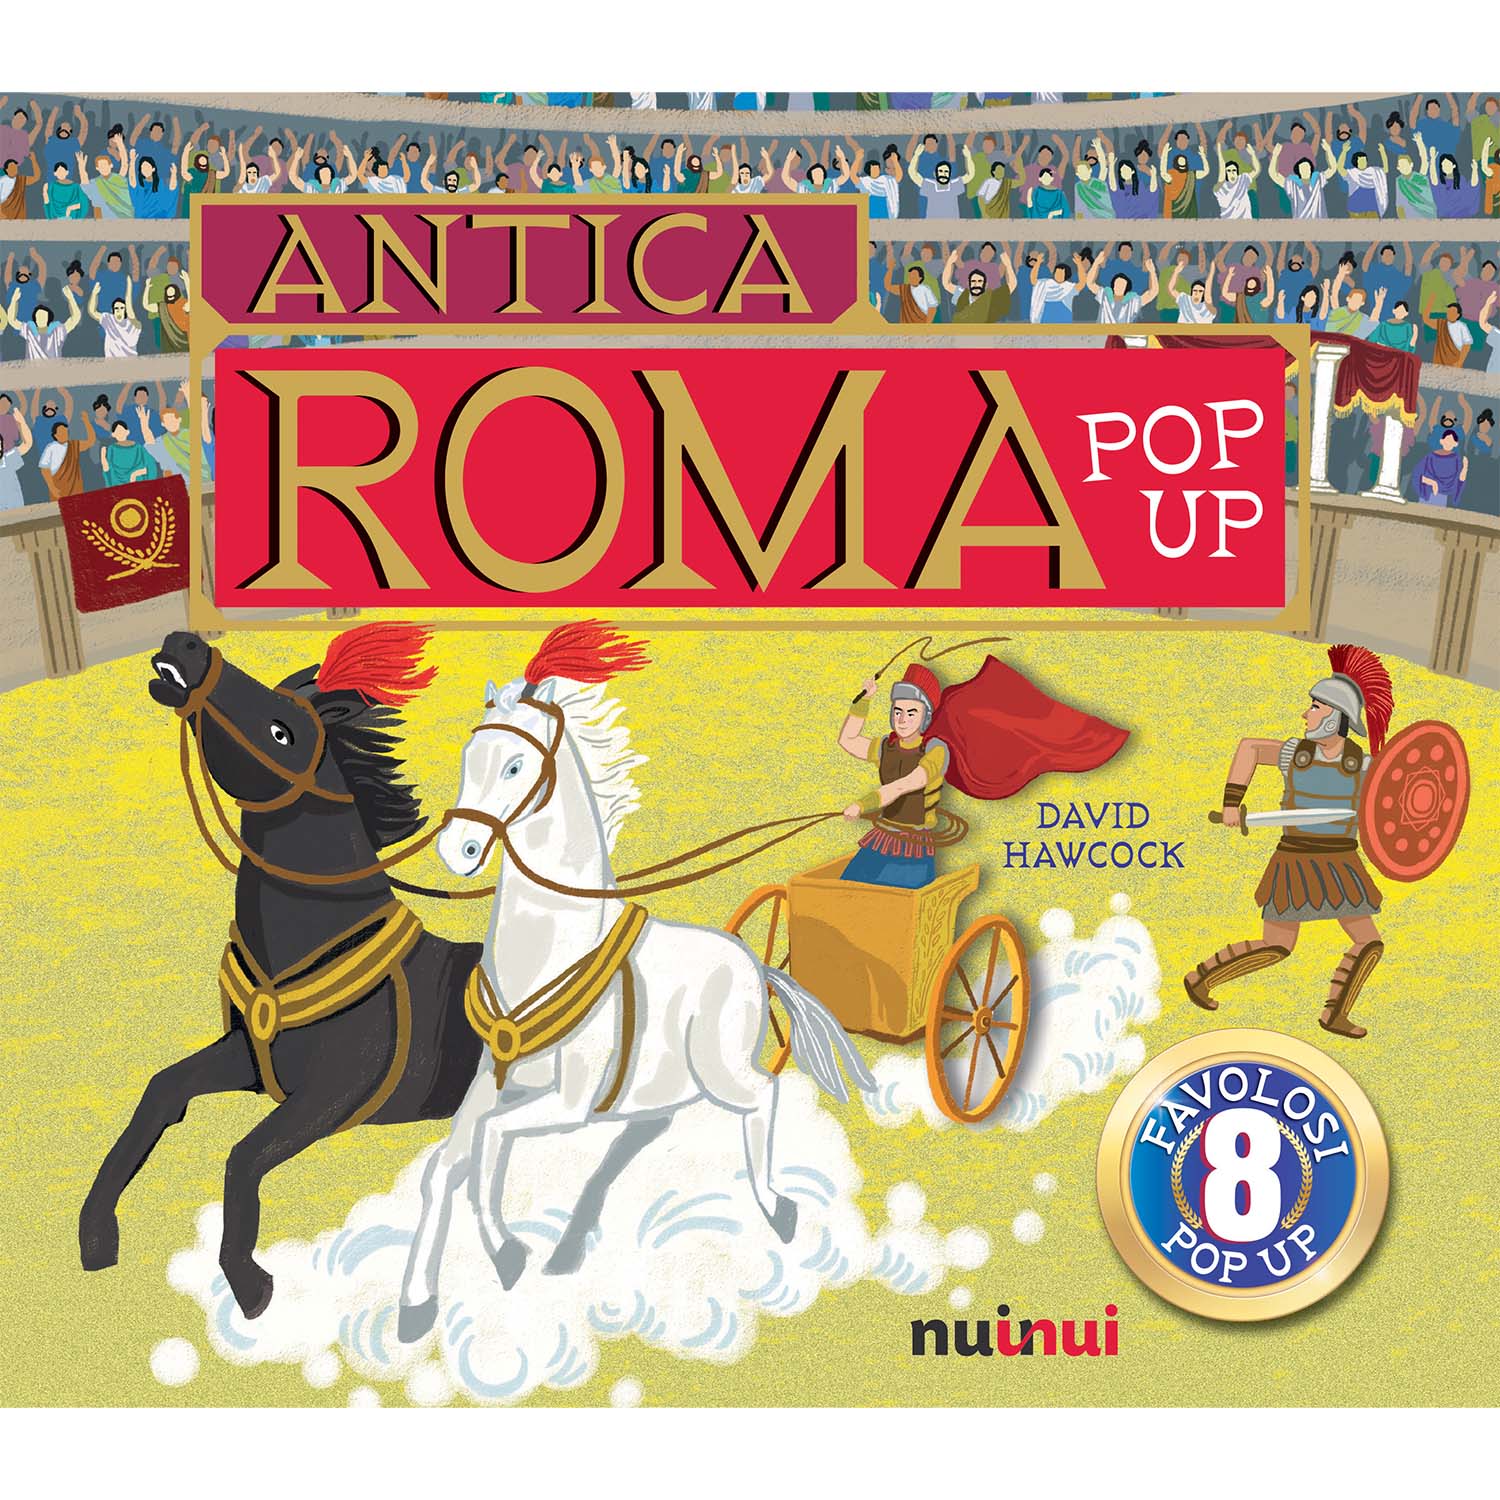 Antiche civiltà pop up - Antica Roma